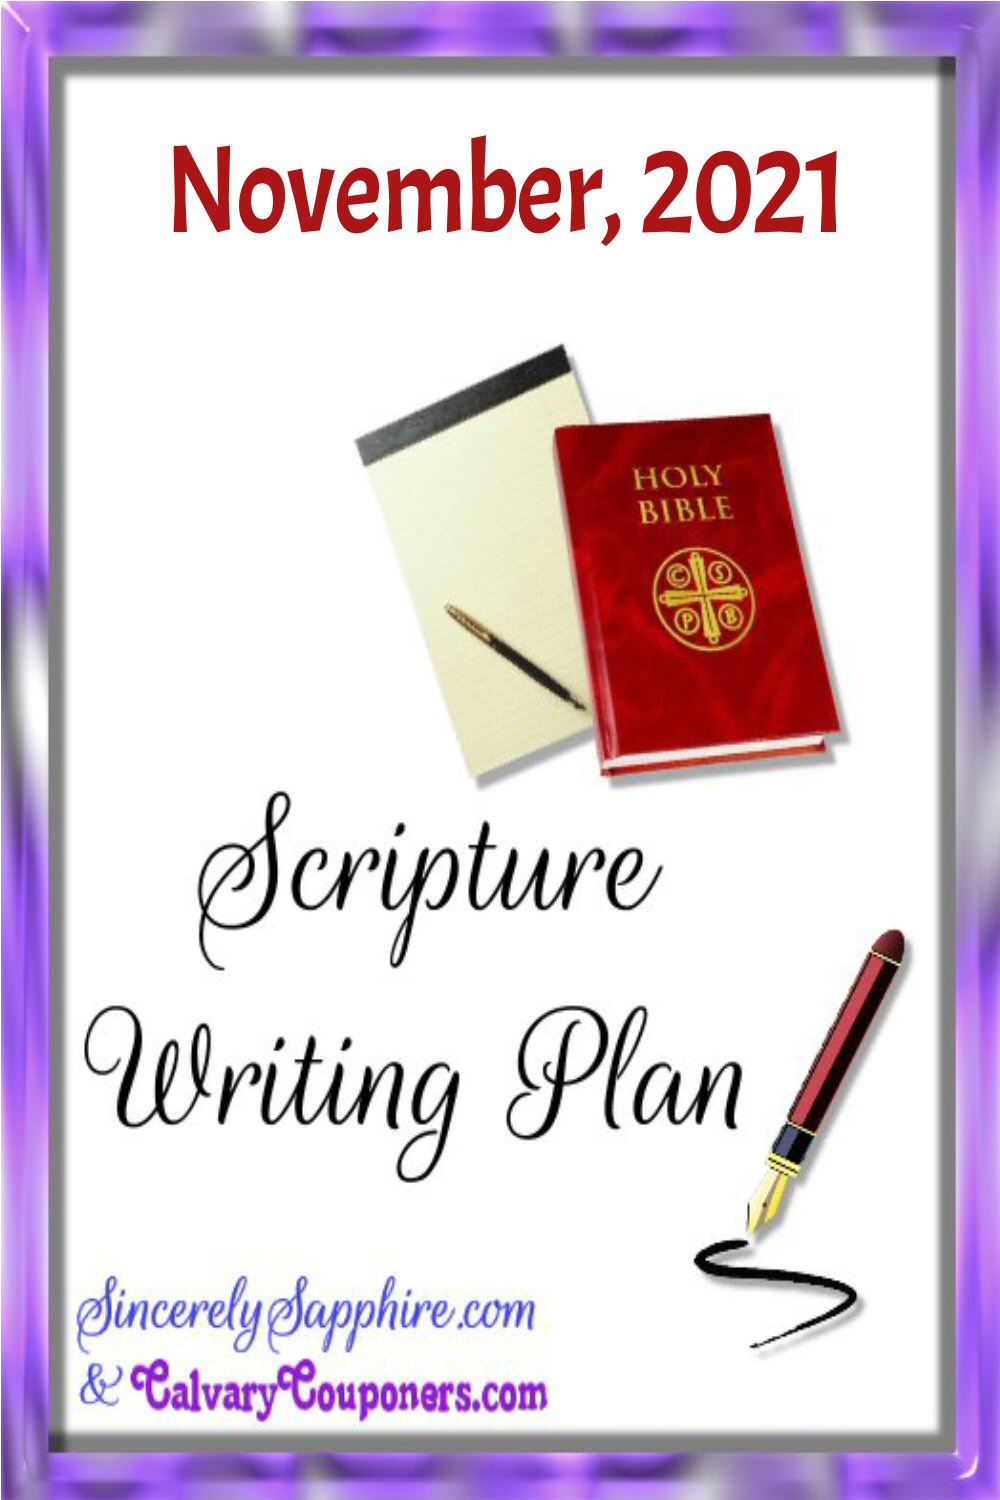 November 2021 scripture writing plan header